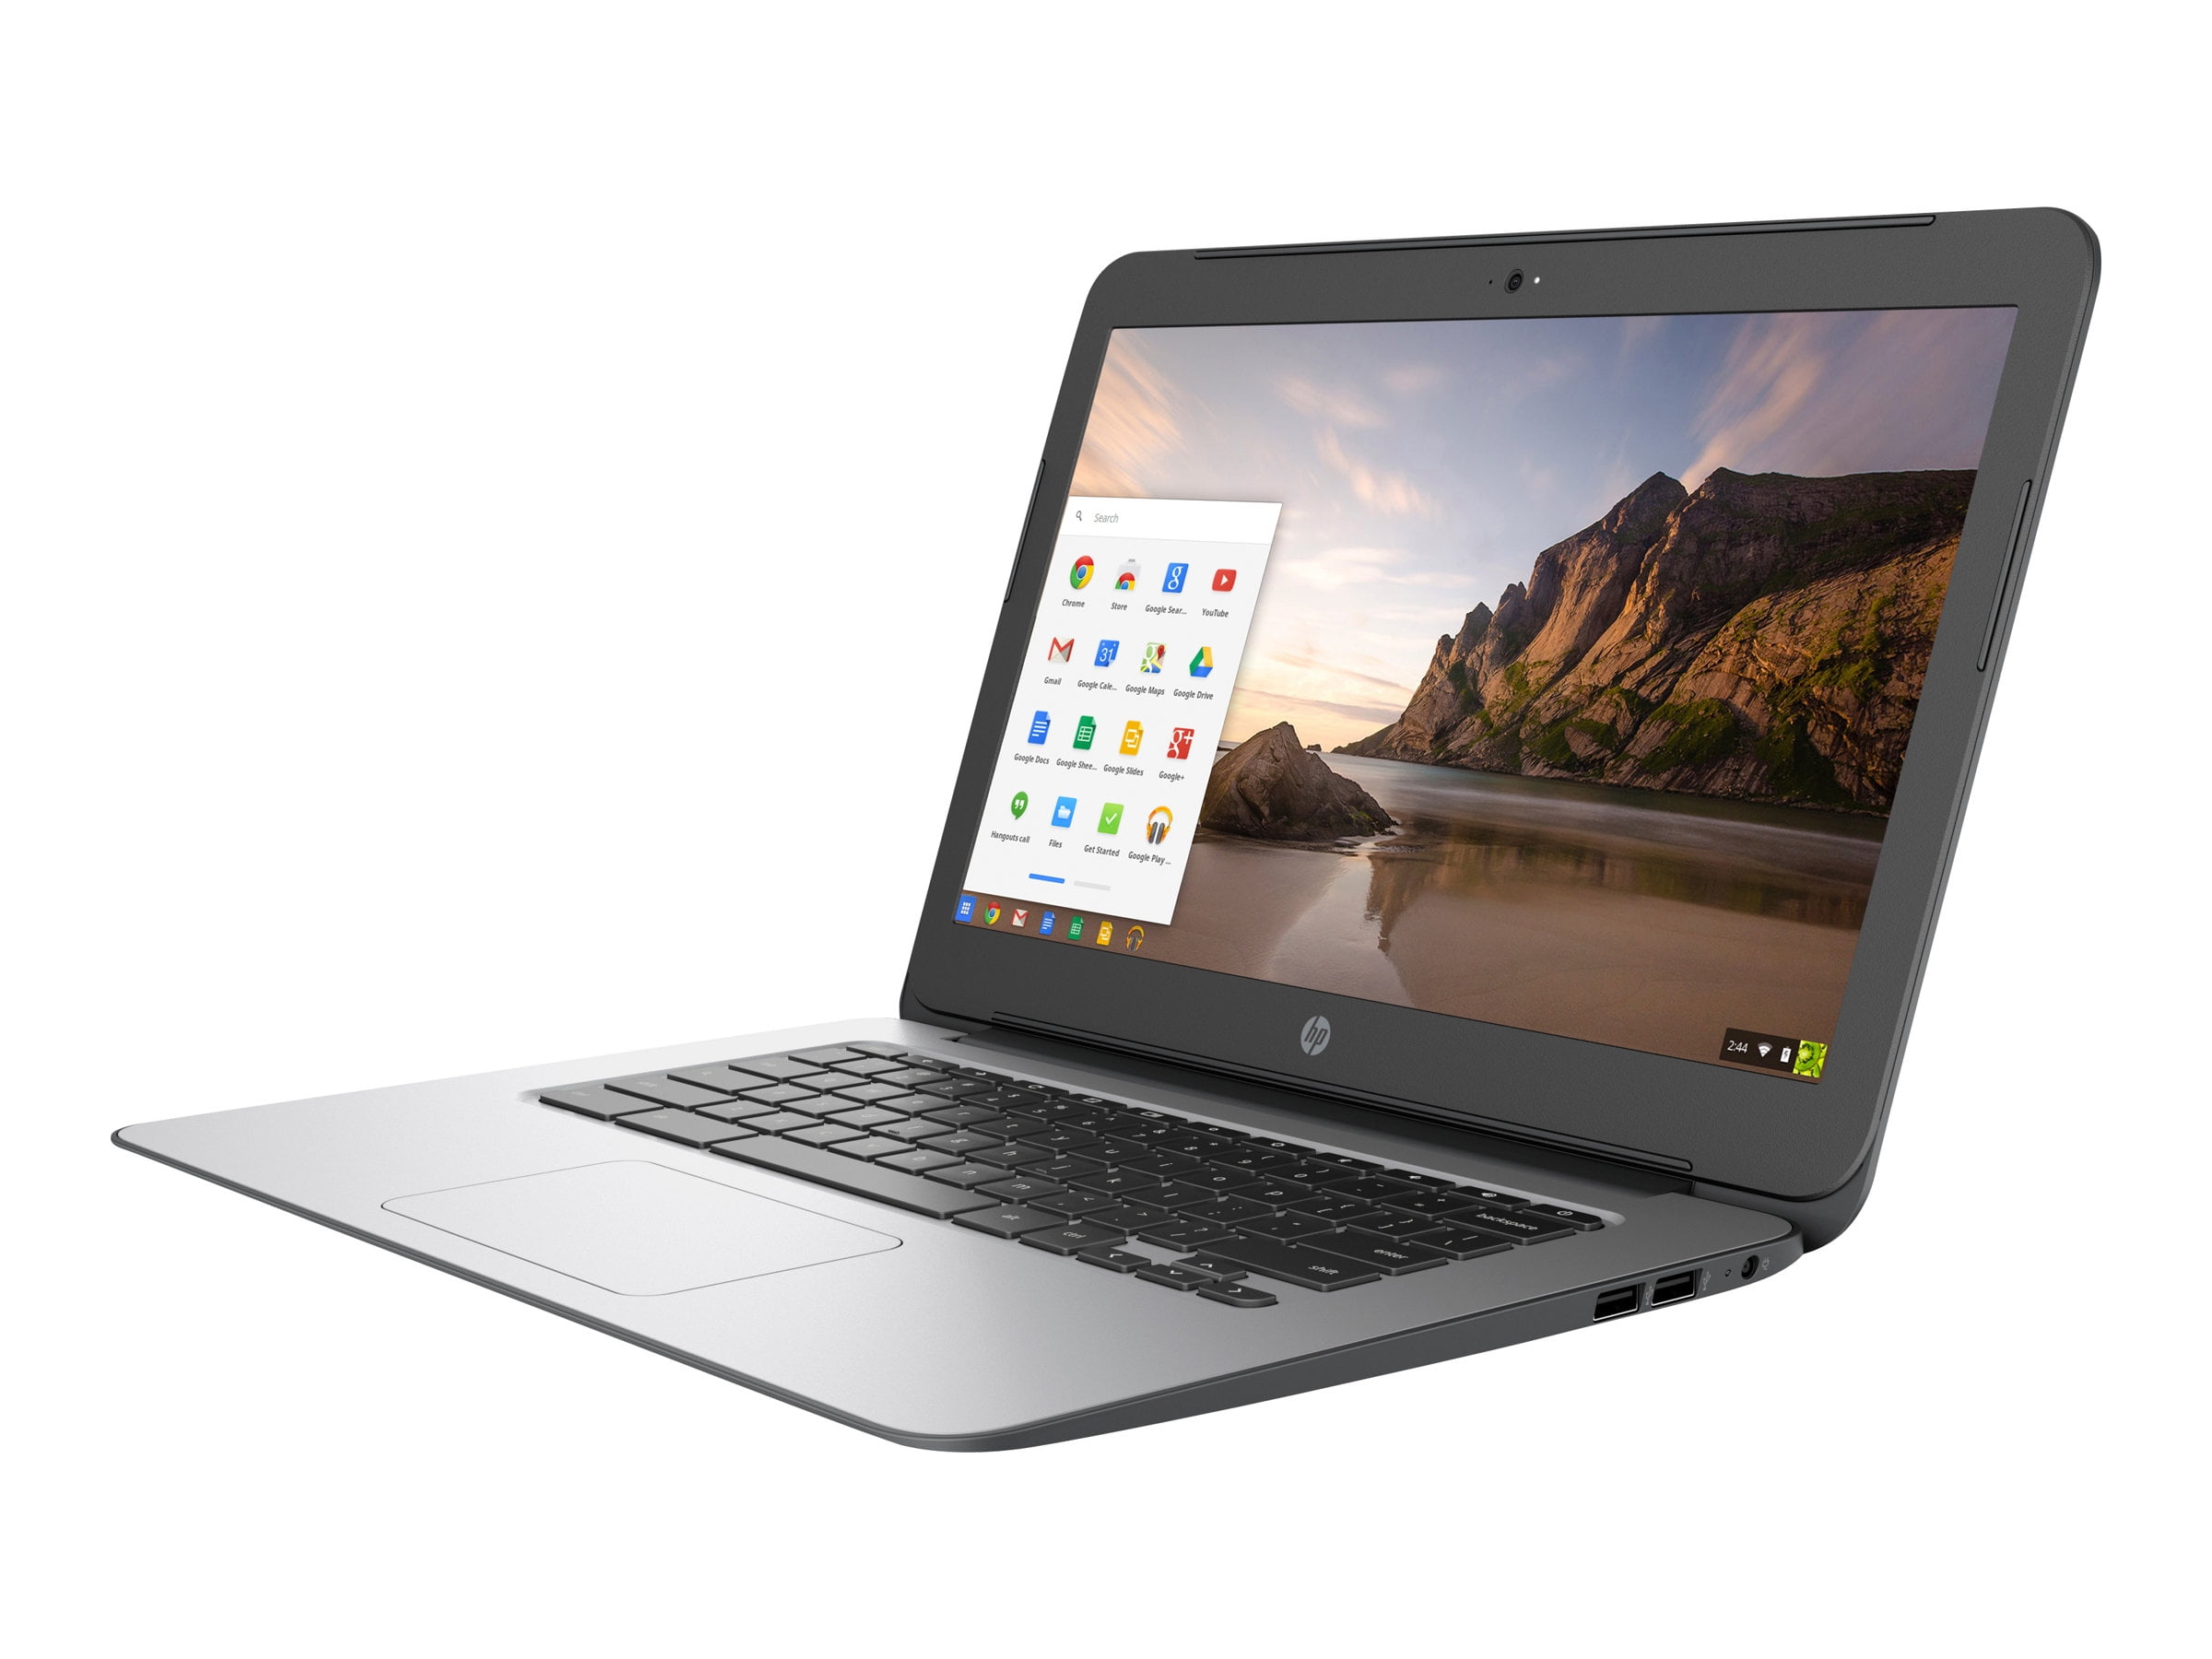 Refurbished HP Chromebook 14 G4 - Celeron N2840 / 2.16 GHz - Chrome OS - 4 GB RAM - 16 GB eMMC - 14" 1366 x 768 (HD) - HD Graphics - Wi-Fi - Black (keyboard) - KBD: US - Remarketed